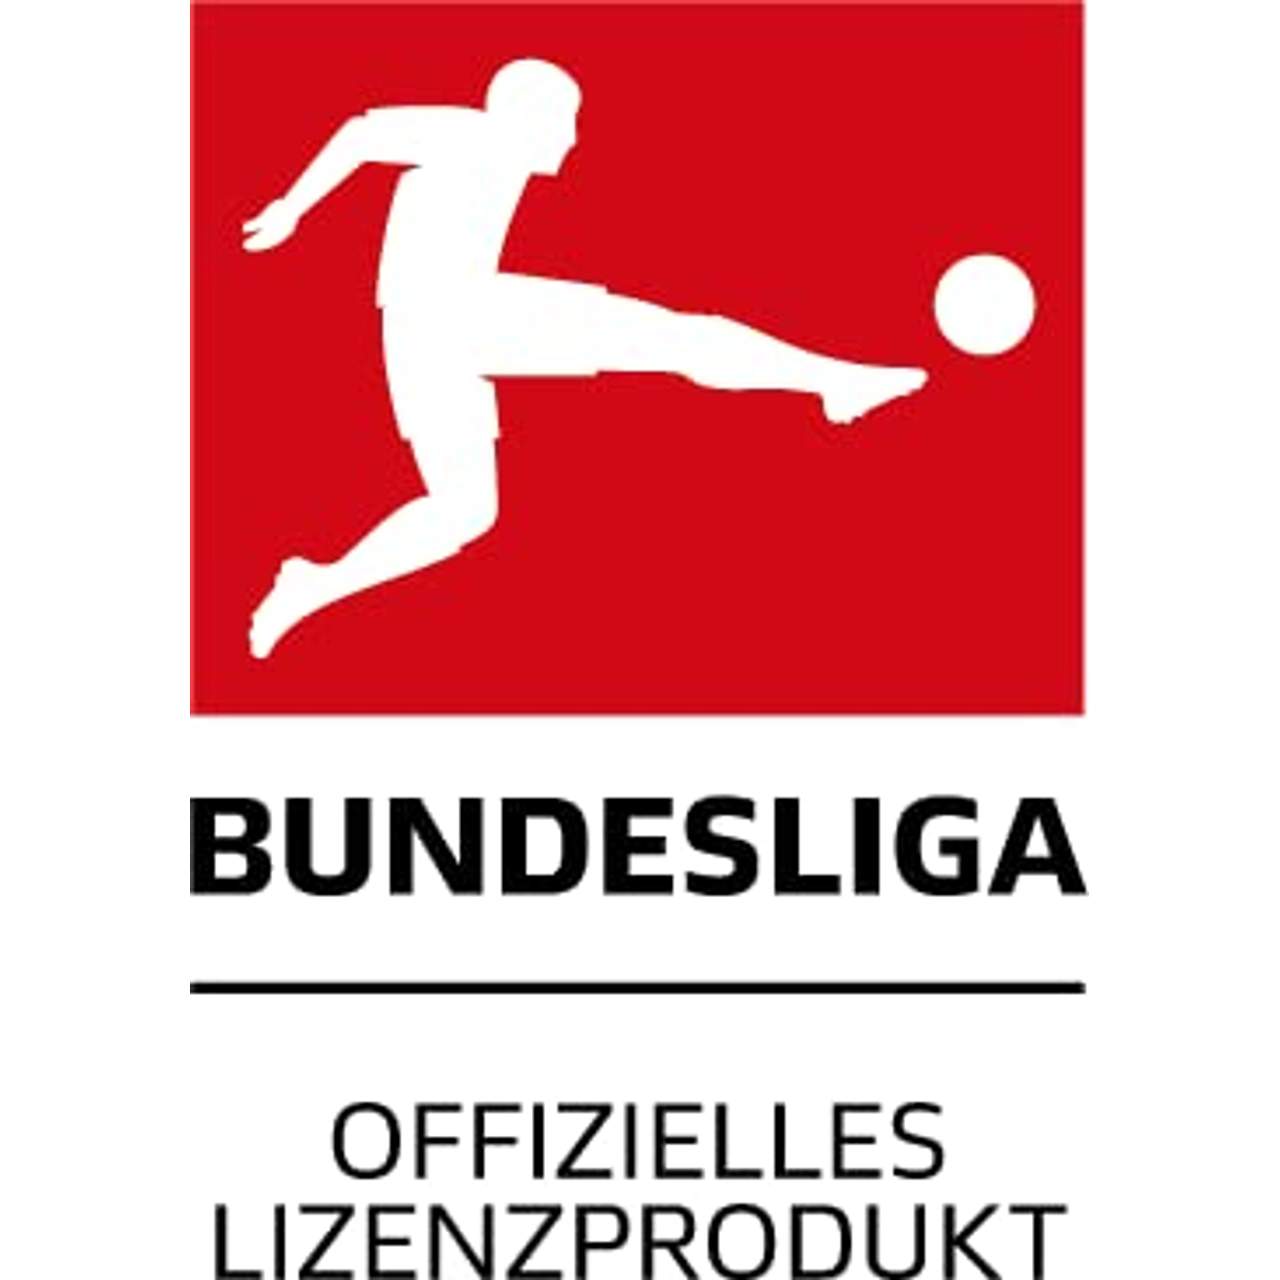 Derbystar Bundesliga Clublogo Pro Fußball weiß